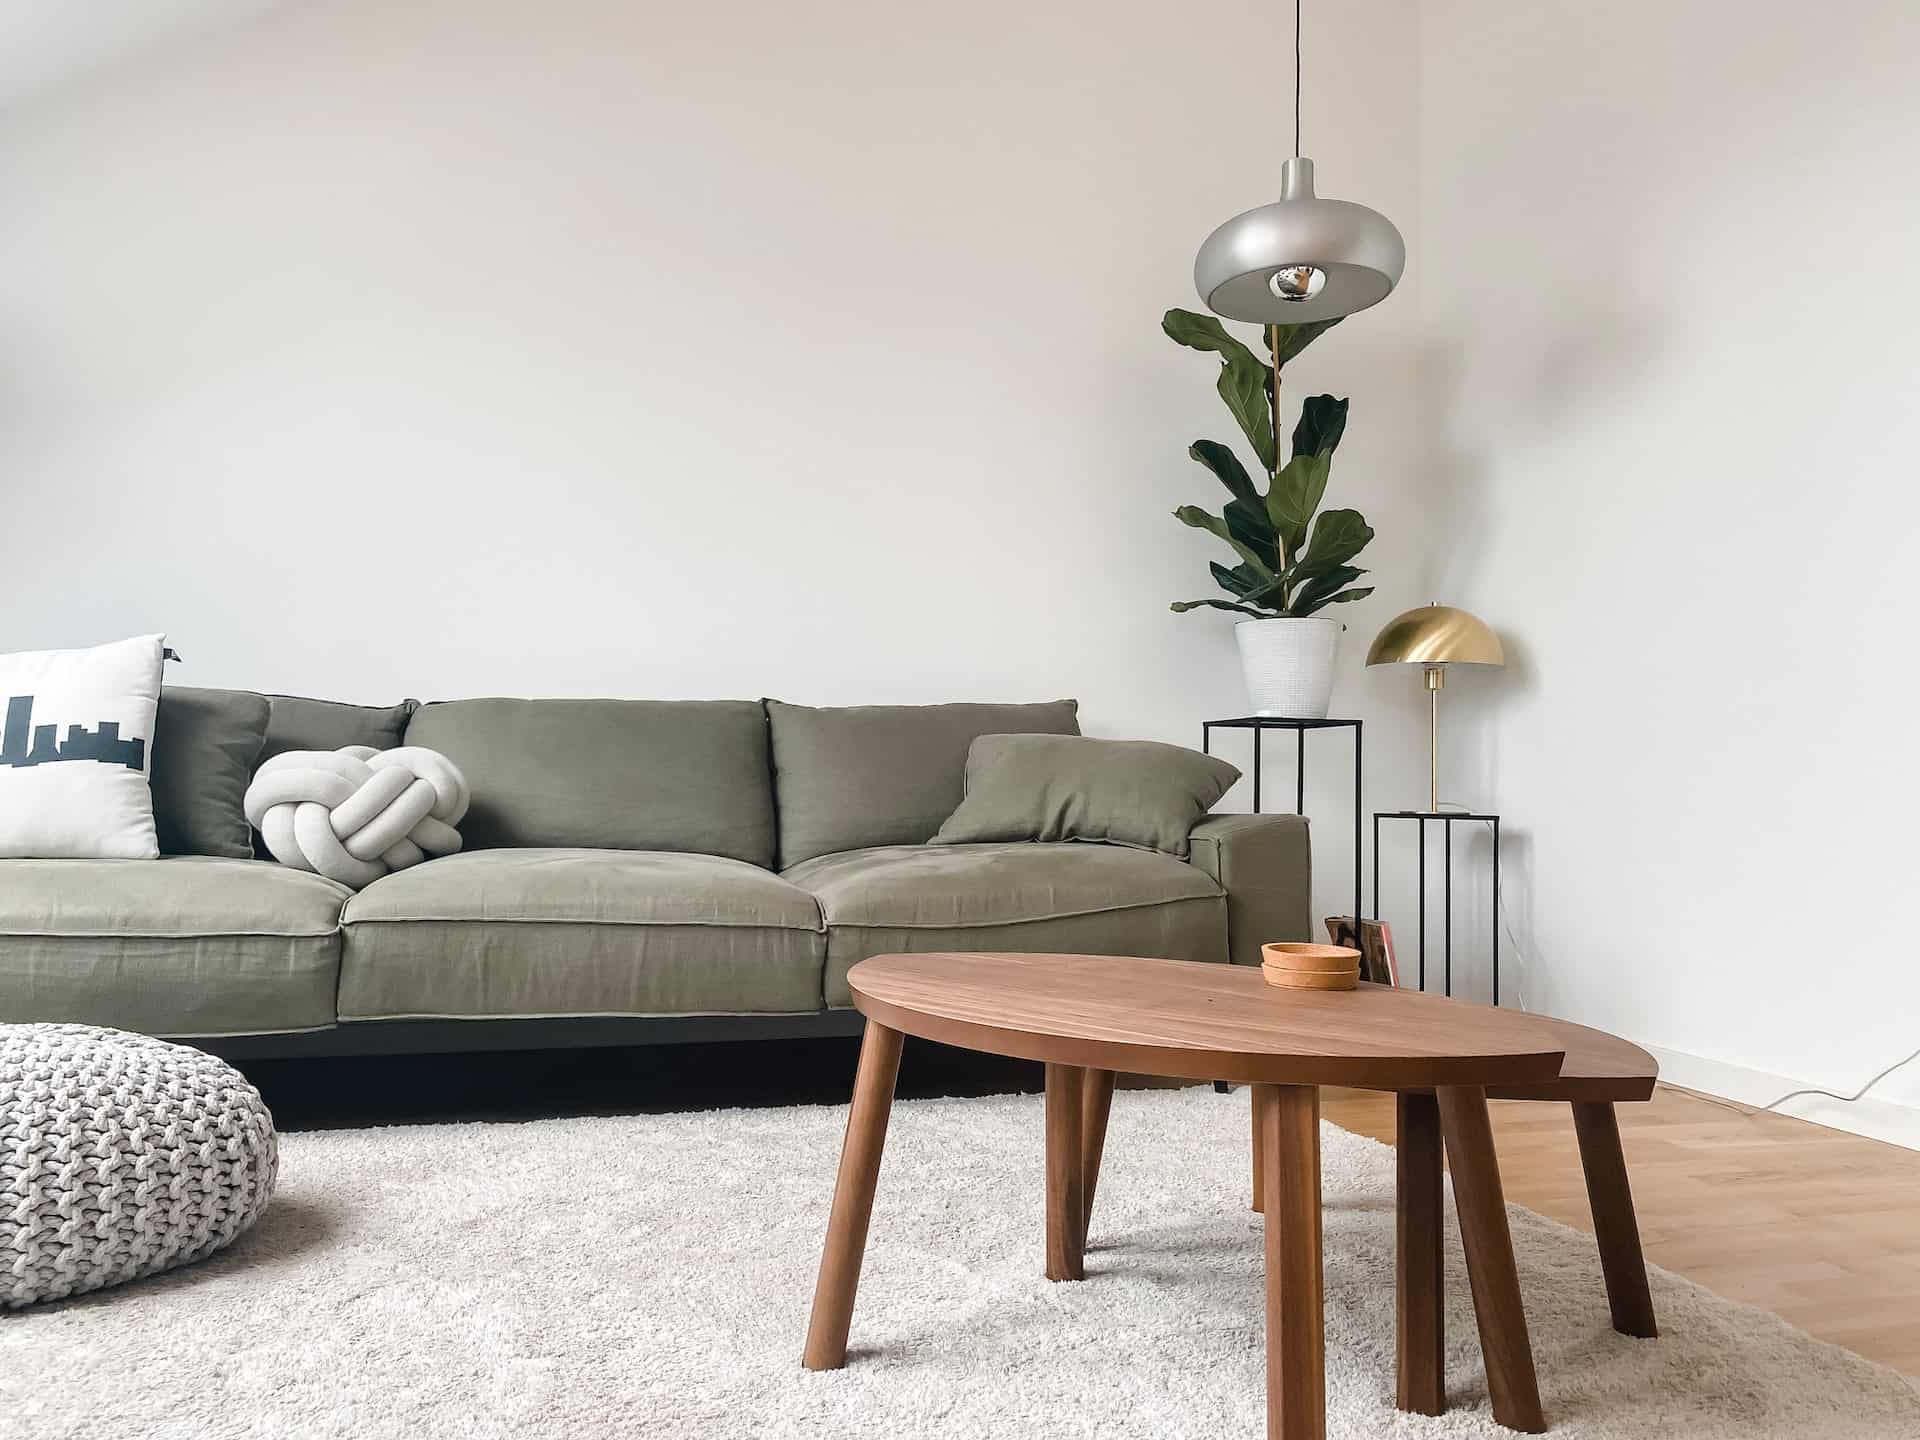 Living room with sleeping function – we arrange